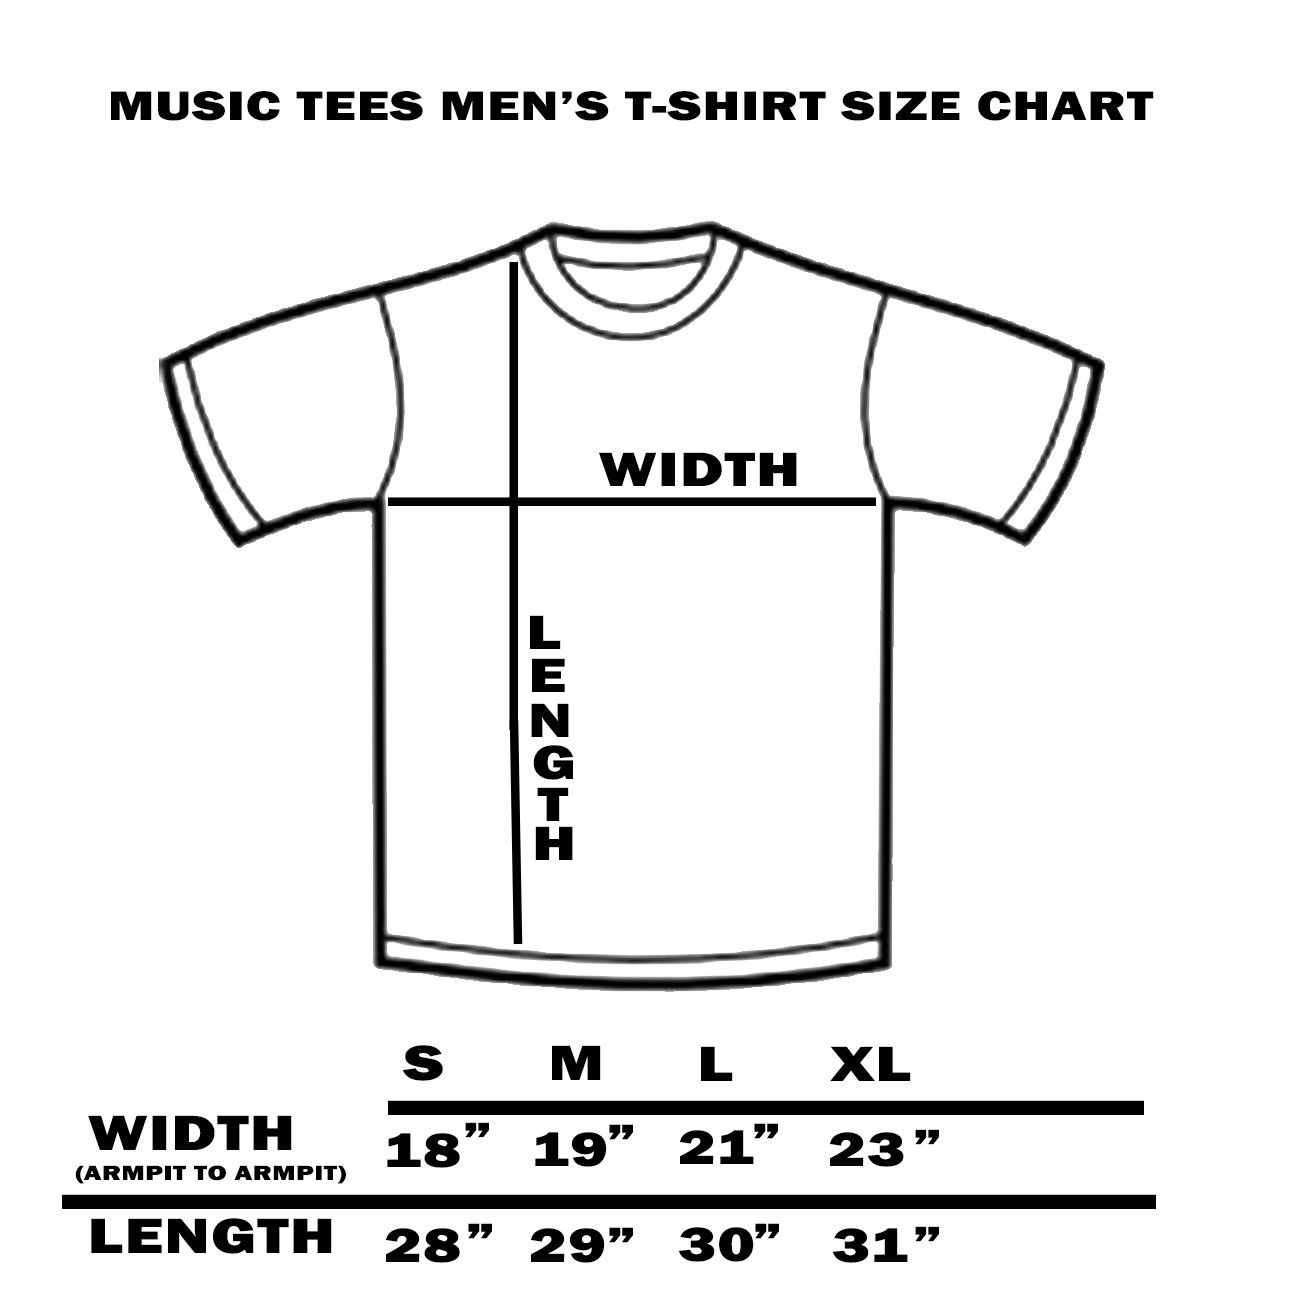 The Beatles Taxman Men's Graphic T-Shirt